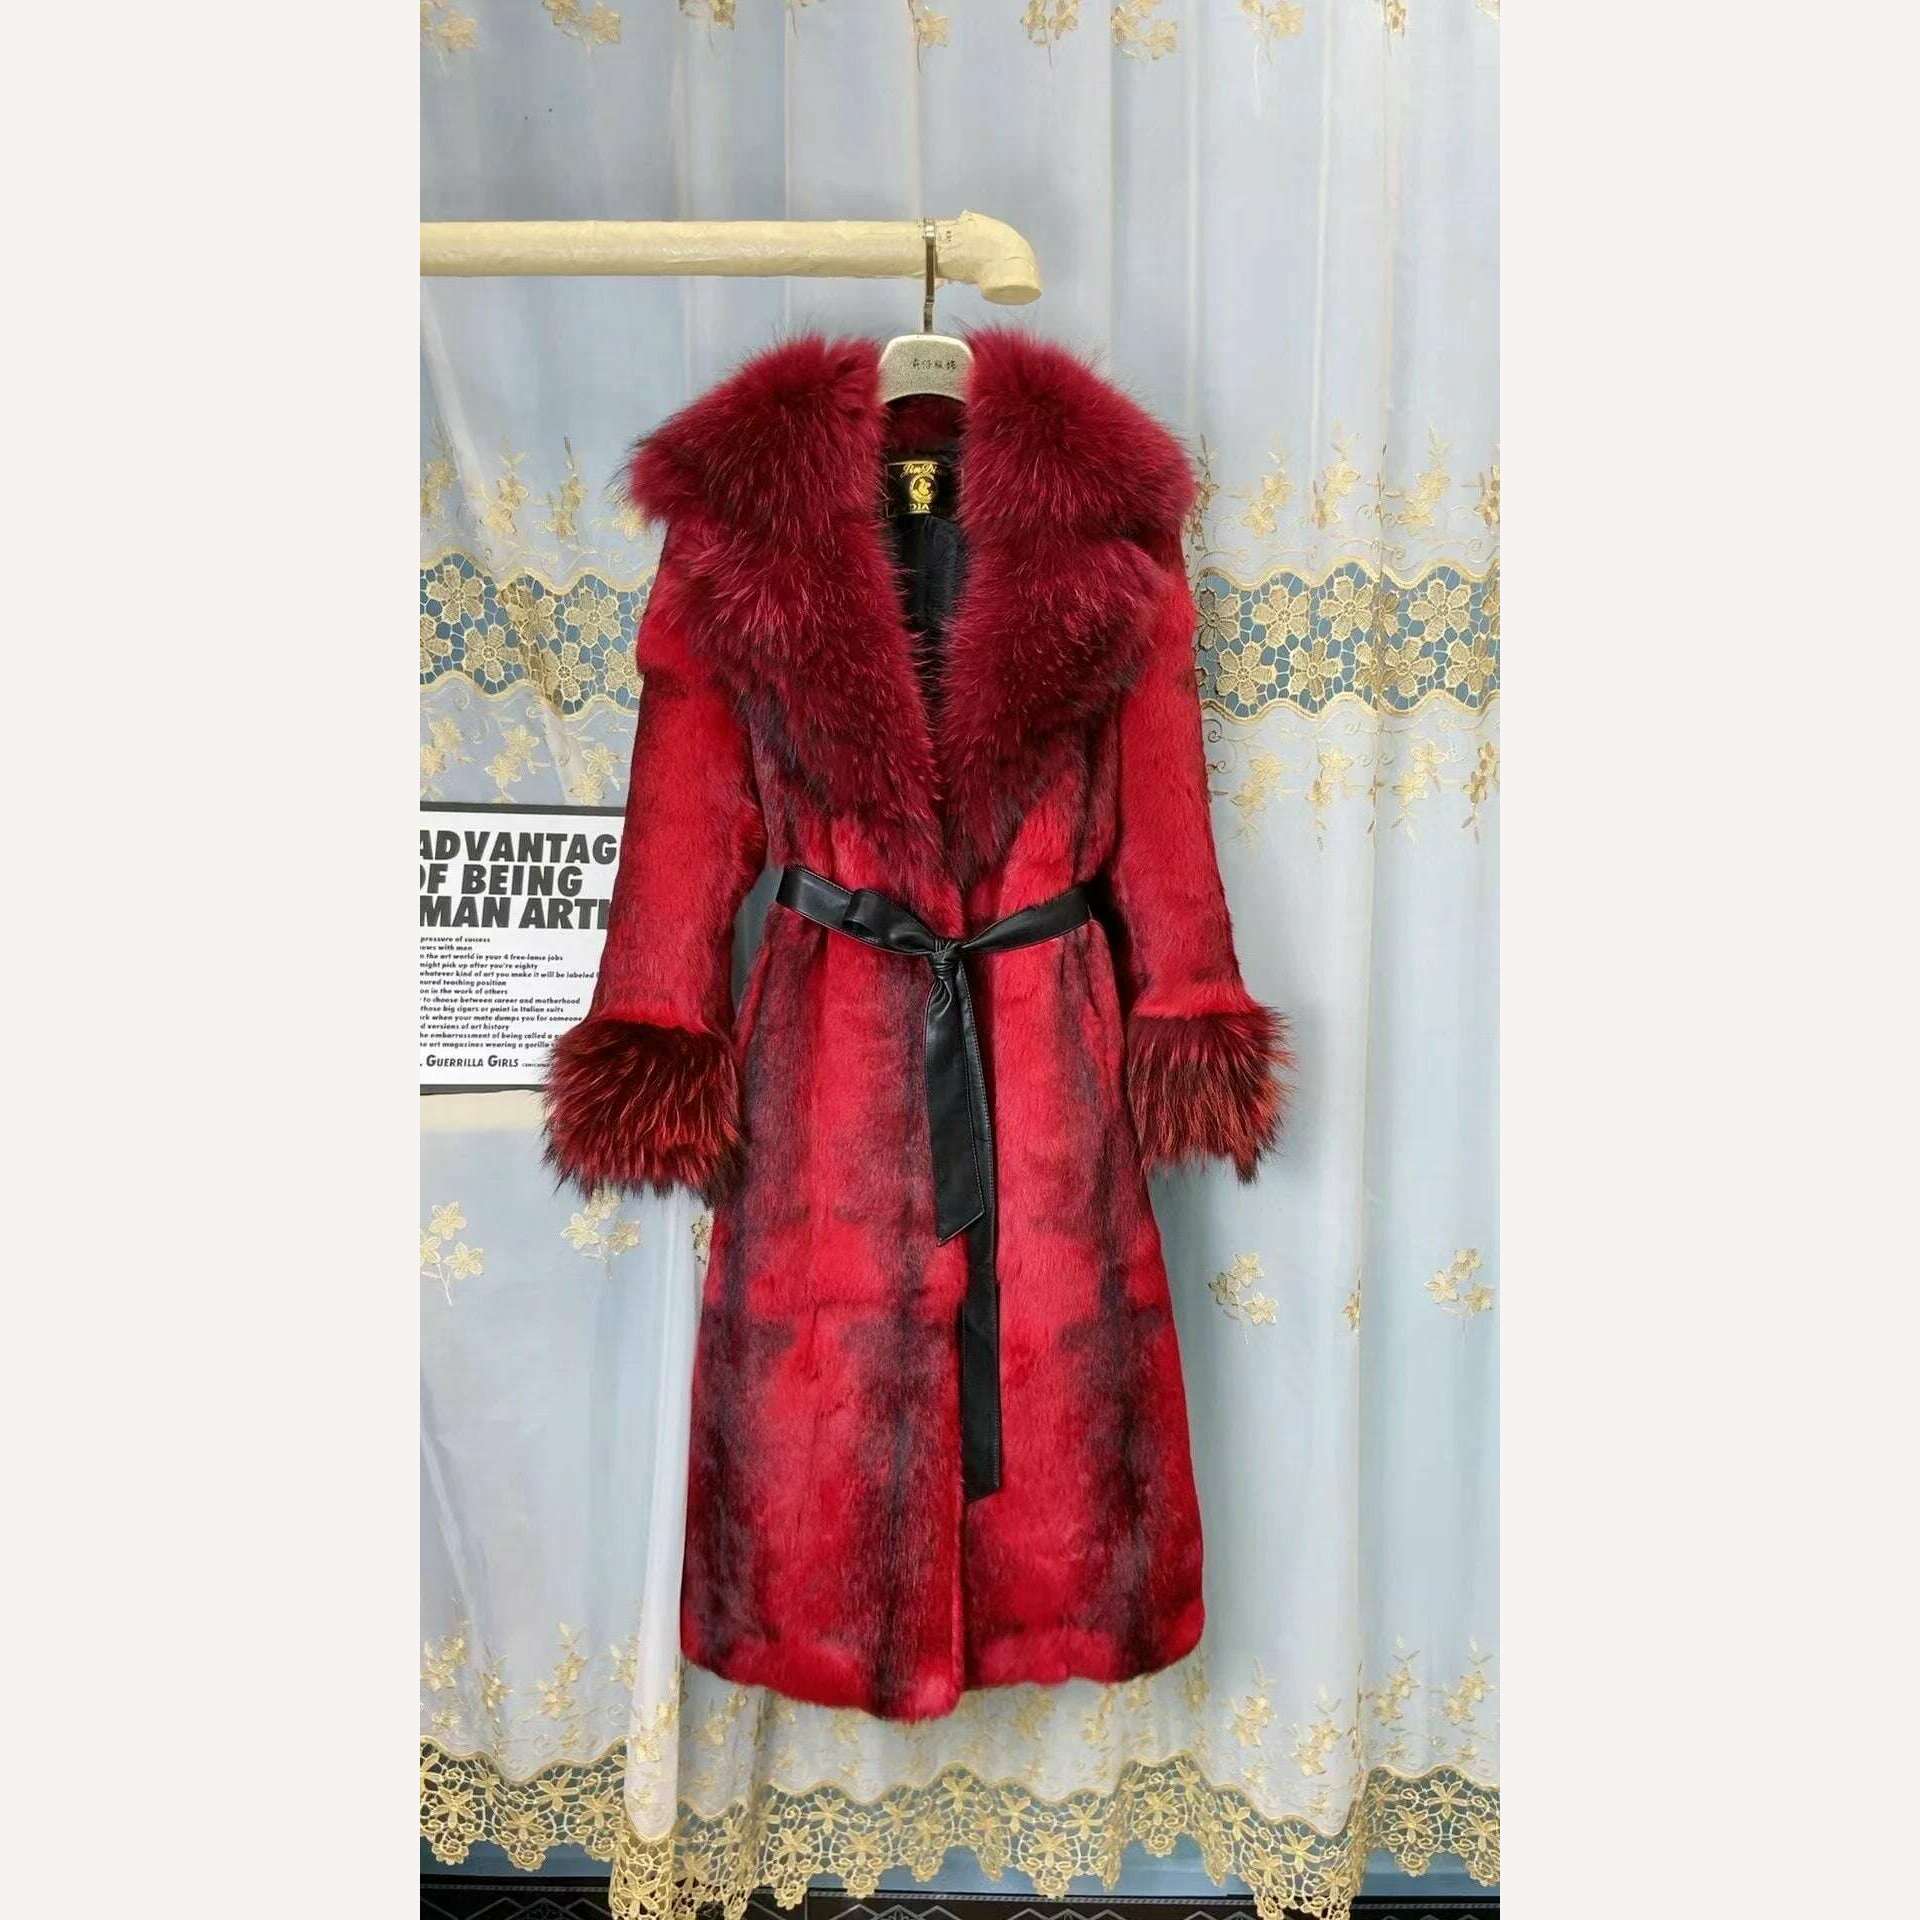 KIMLUD, Women Winter Fashion Real Fur Coat X-long Natural Rabbit Fur Jacket With Real Fox Fur Collar Cuffs Winter Jacket Ladies Fur Coat, 2 / S bust 90cm, KIMLUD Women's Clothes